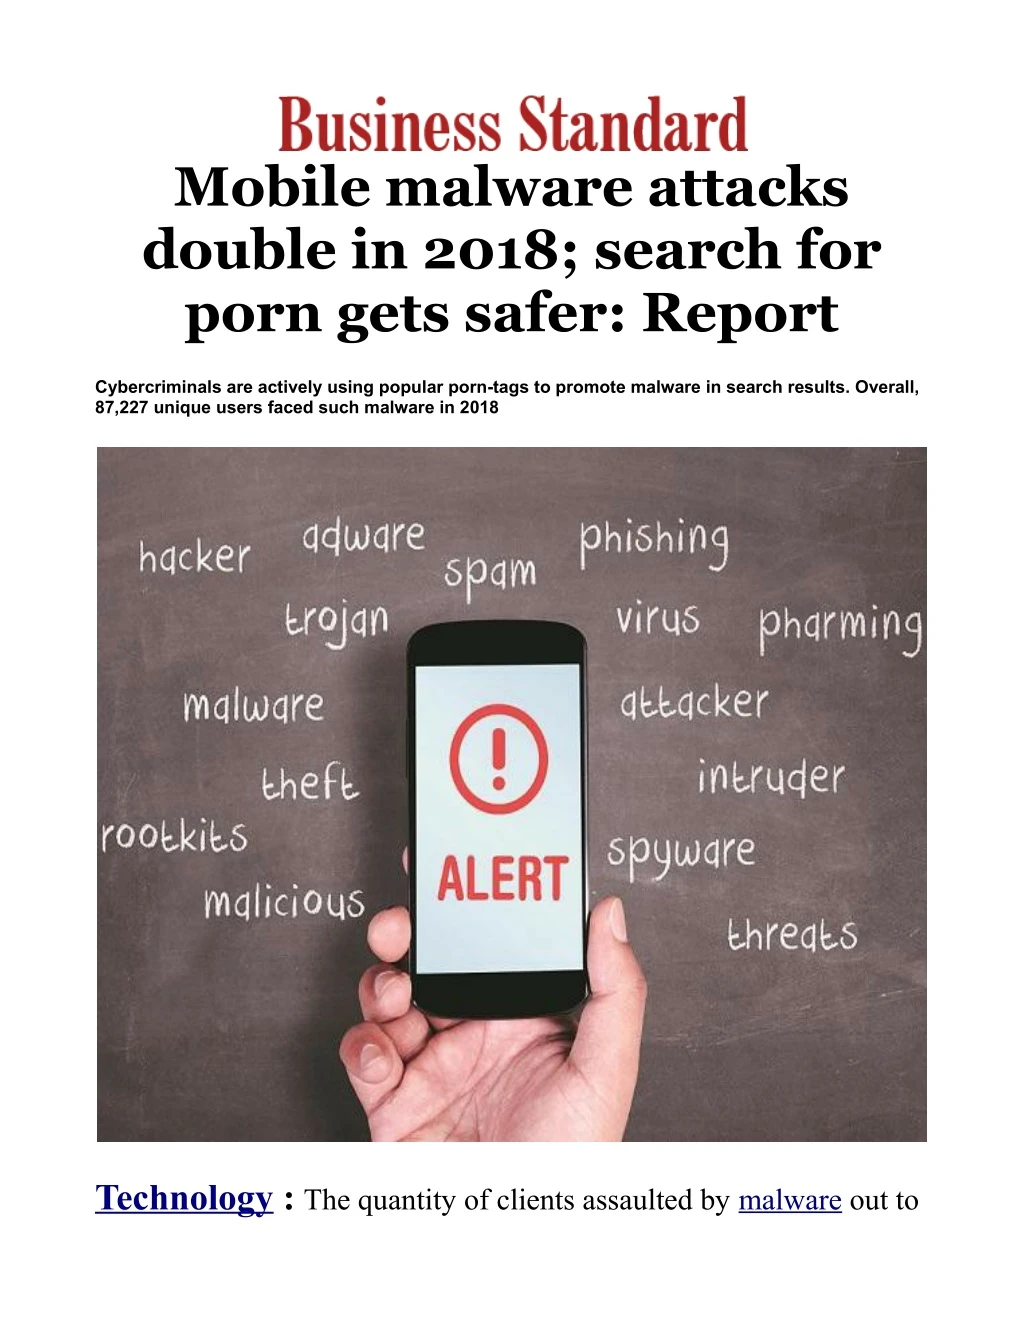 mobile malware attacks double in 2018 search